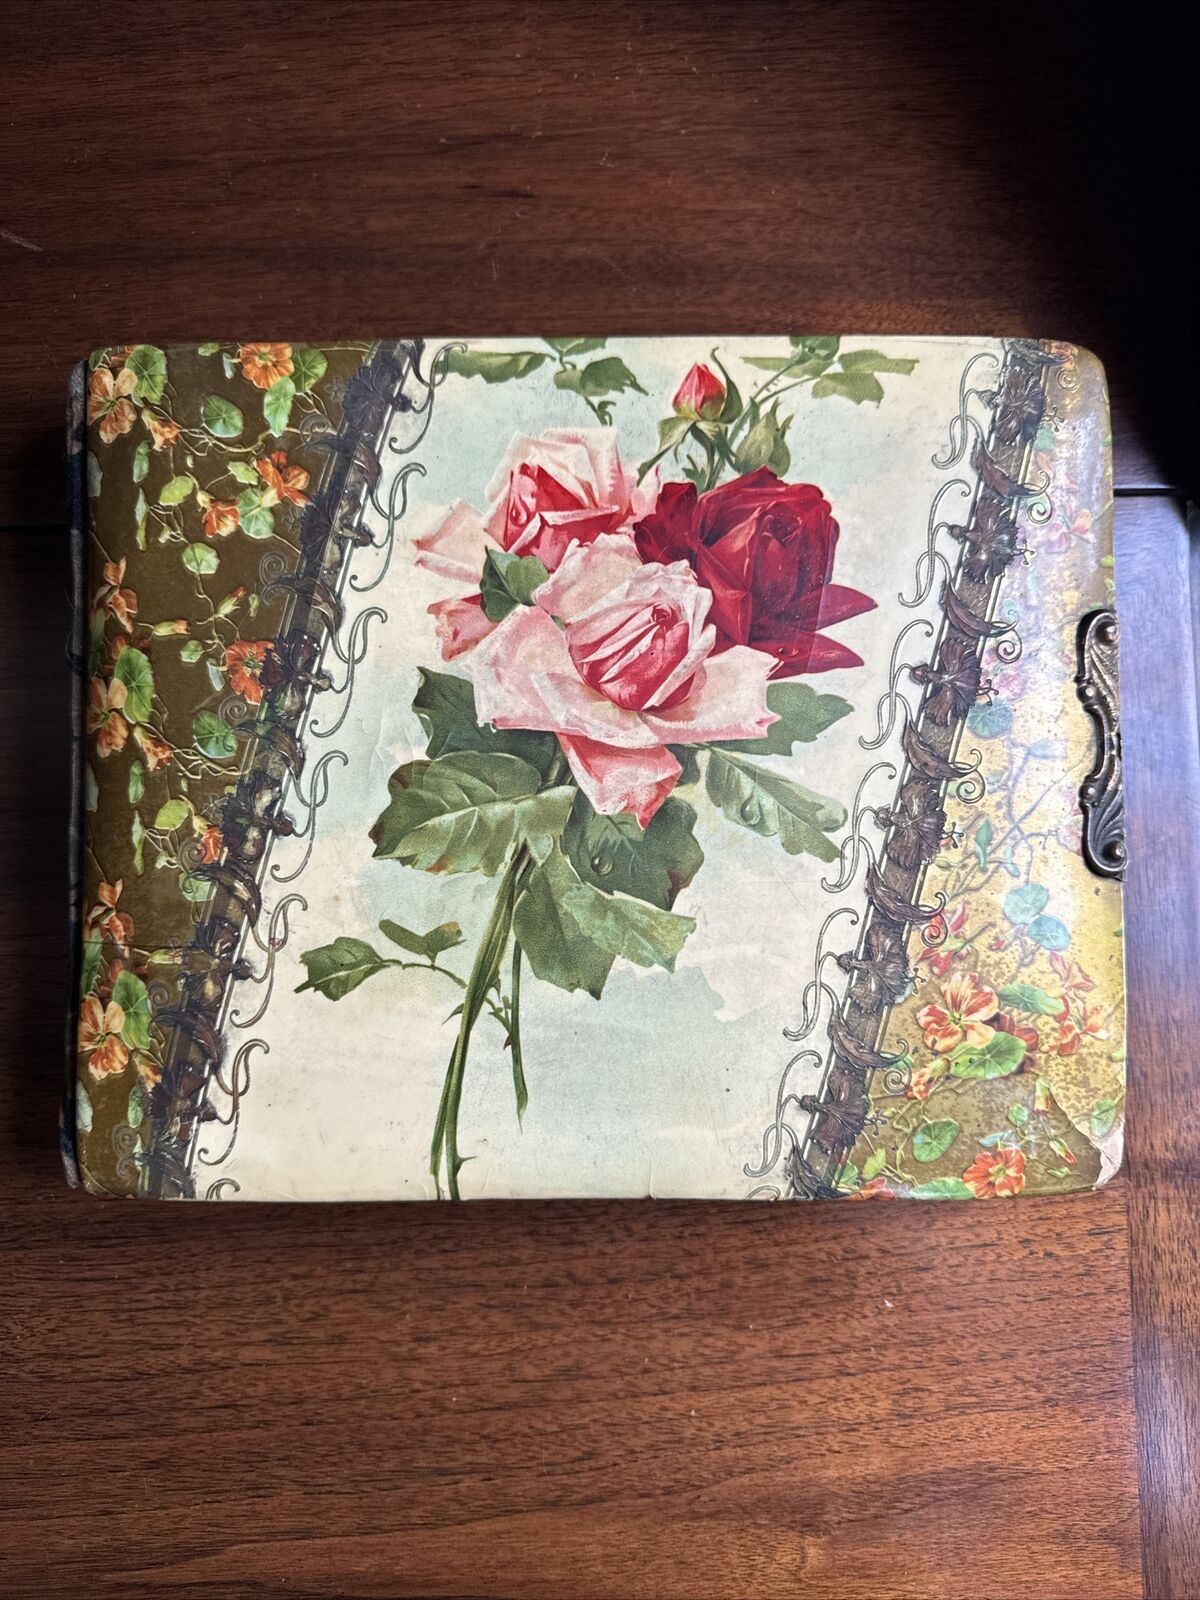 Antique Celluloid Victorian Photo Album with Rose Design 1800s